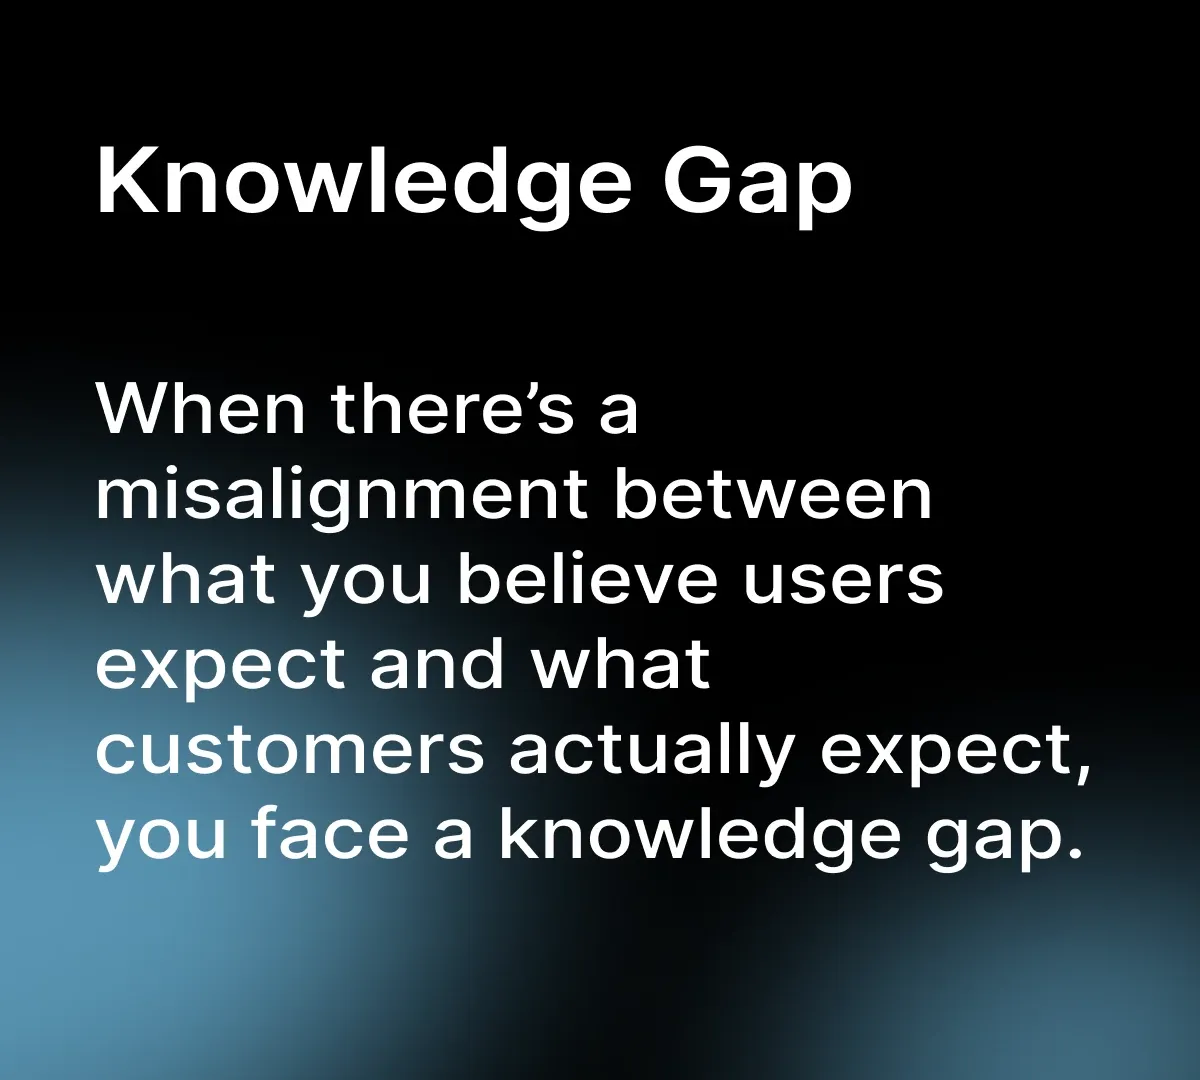 Knowledge gap